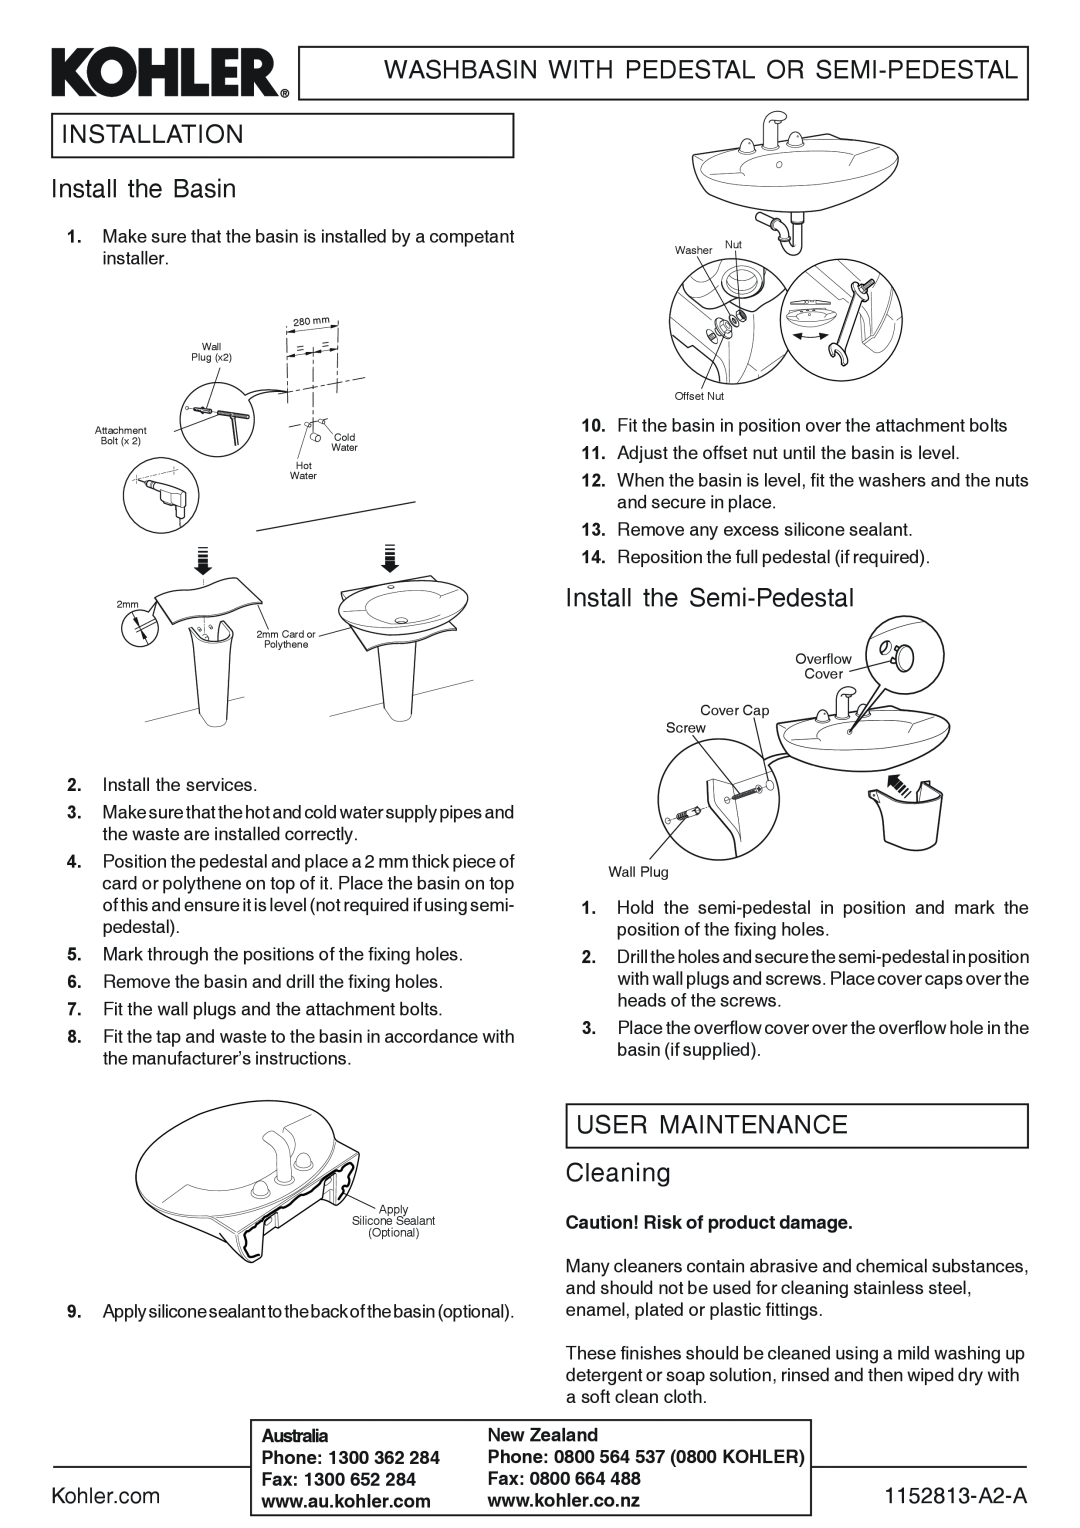 Kohler 1152813-A2-A manual Washbasin With Pedestal Or Semi-Pedestal, INSTALLATION Install the Basin, Australia, Phone, Fax 